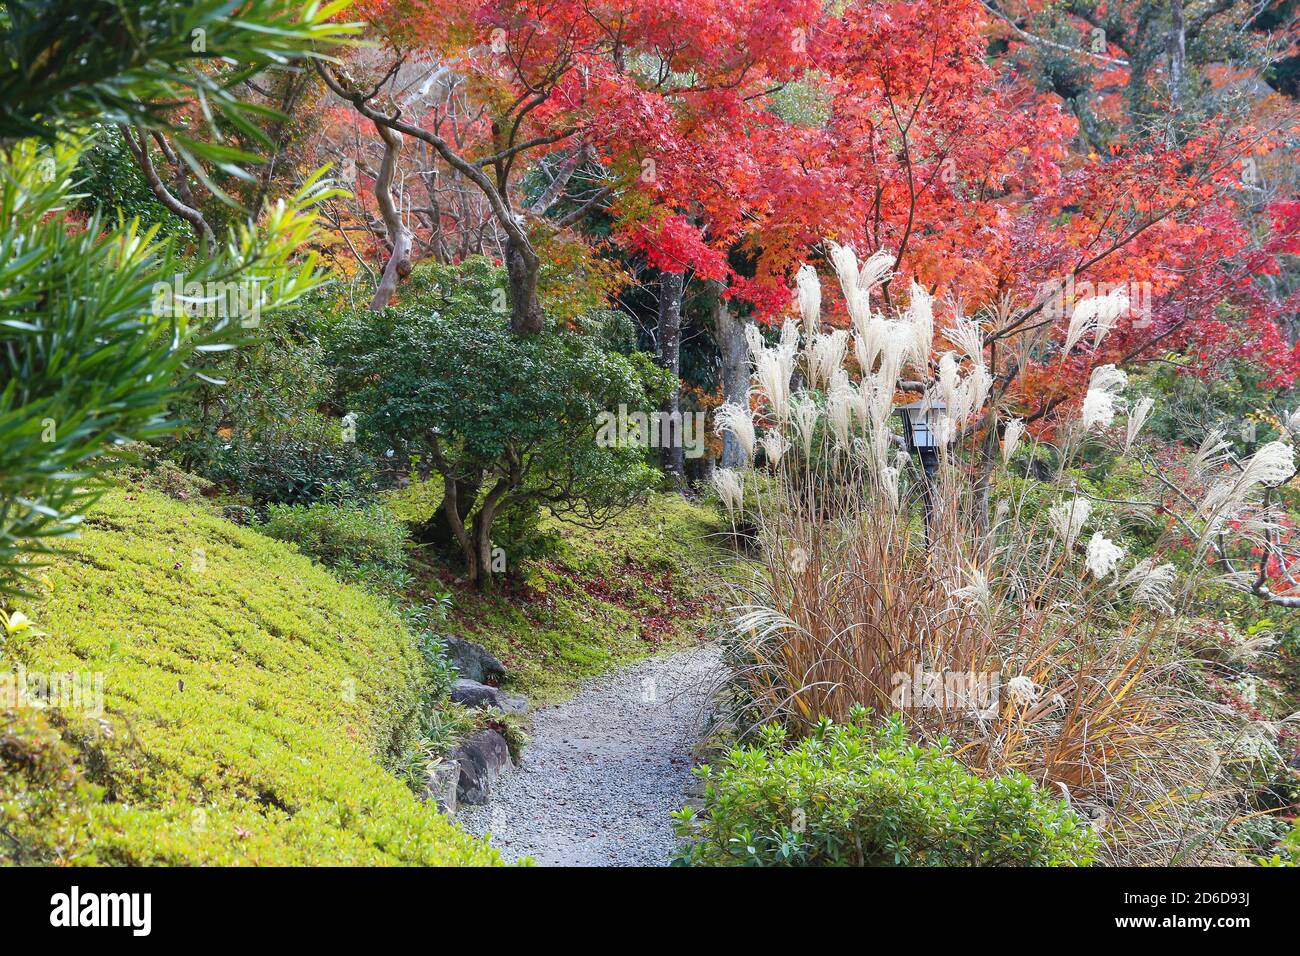 Autumn foliage garden in Japan - red momiji leaves (maple tree) in a Japanese garden of Yoshikien, Nara, Japan. Stock Photo